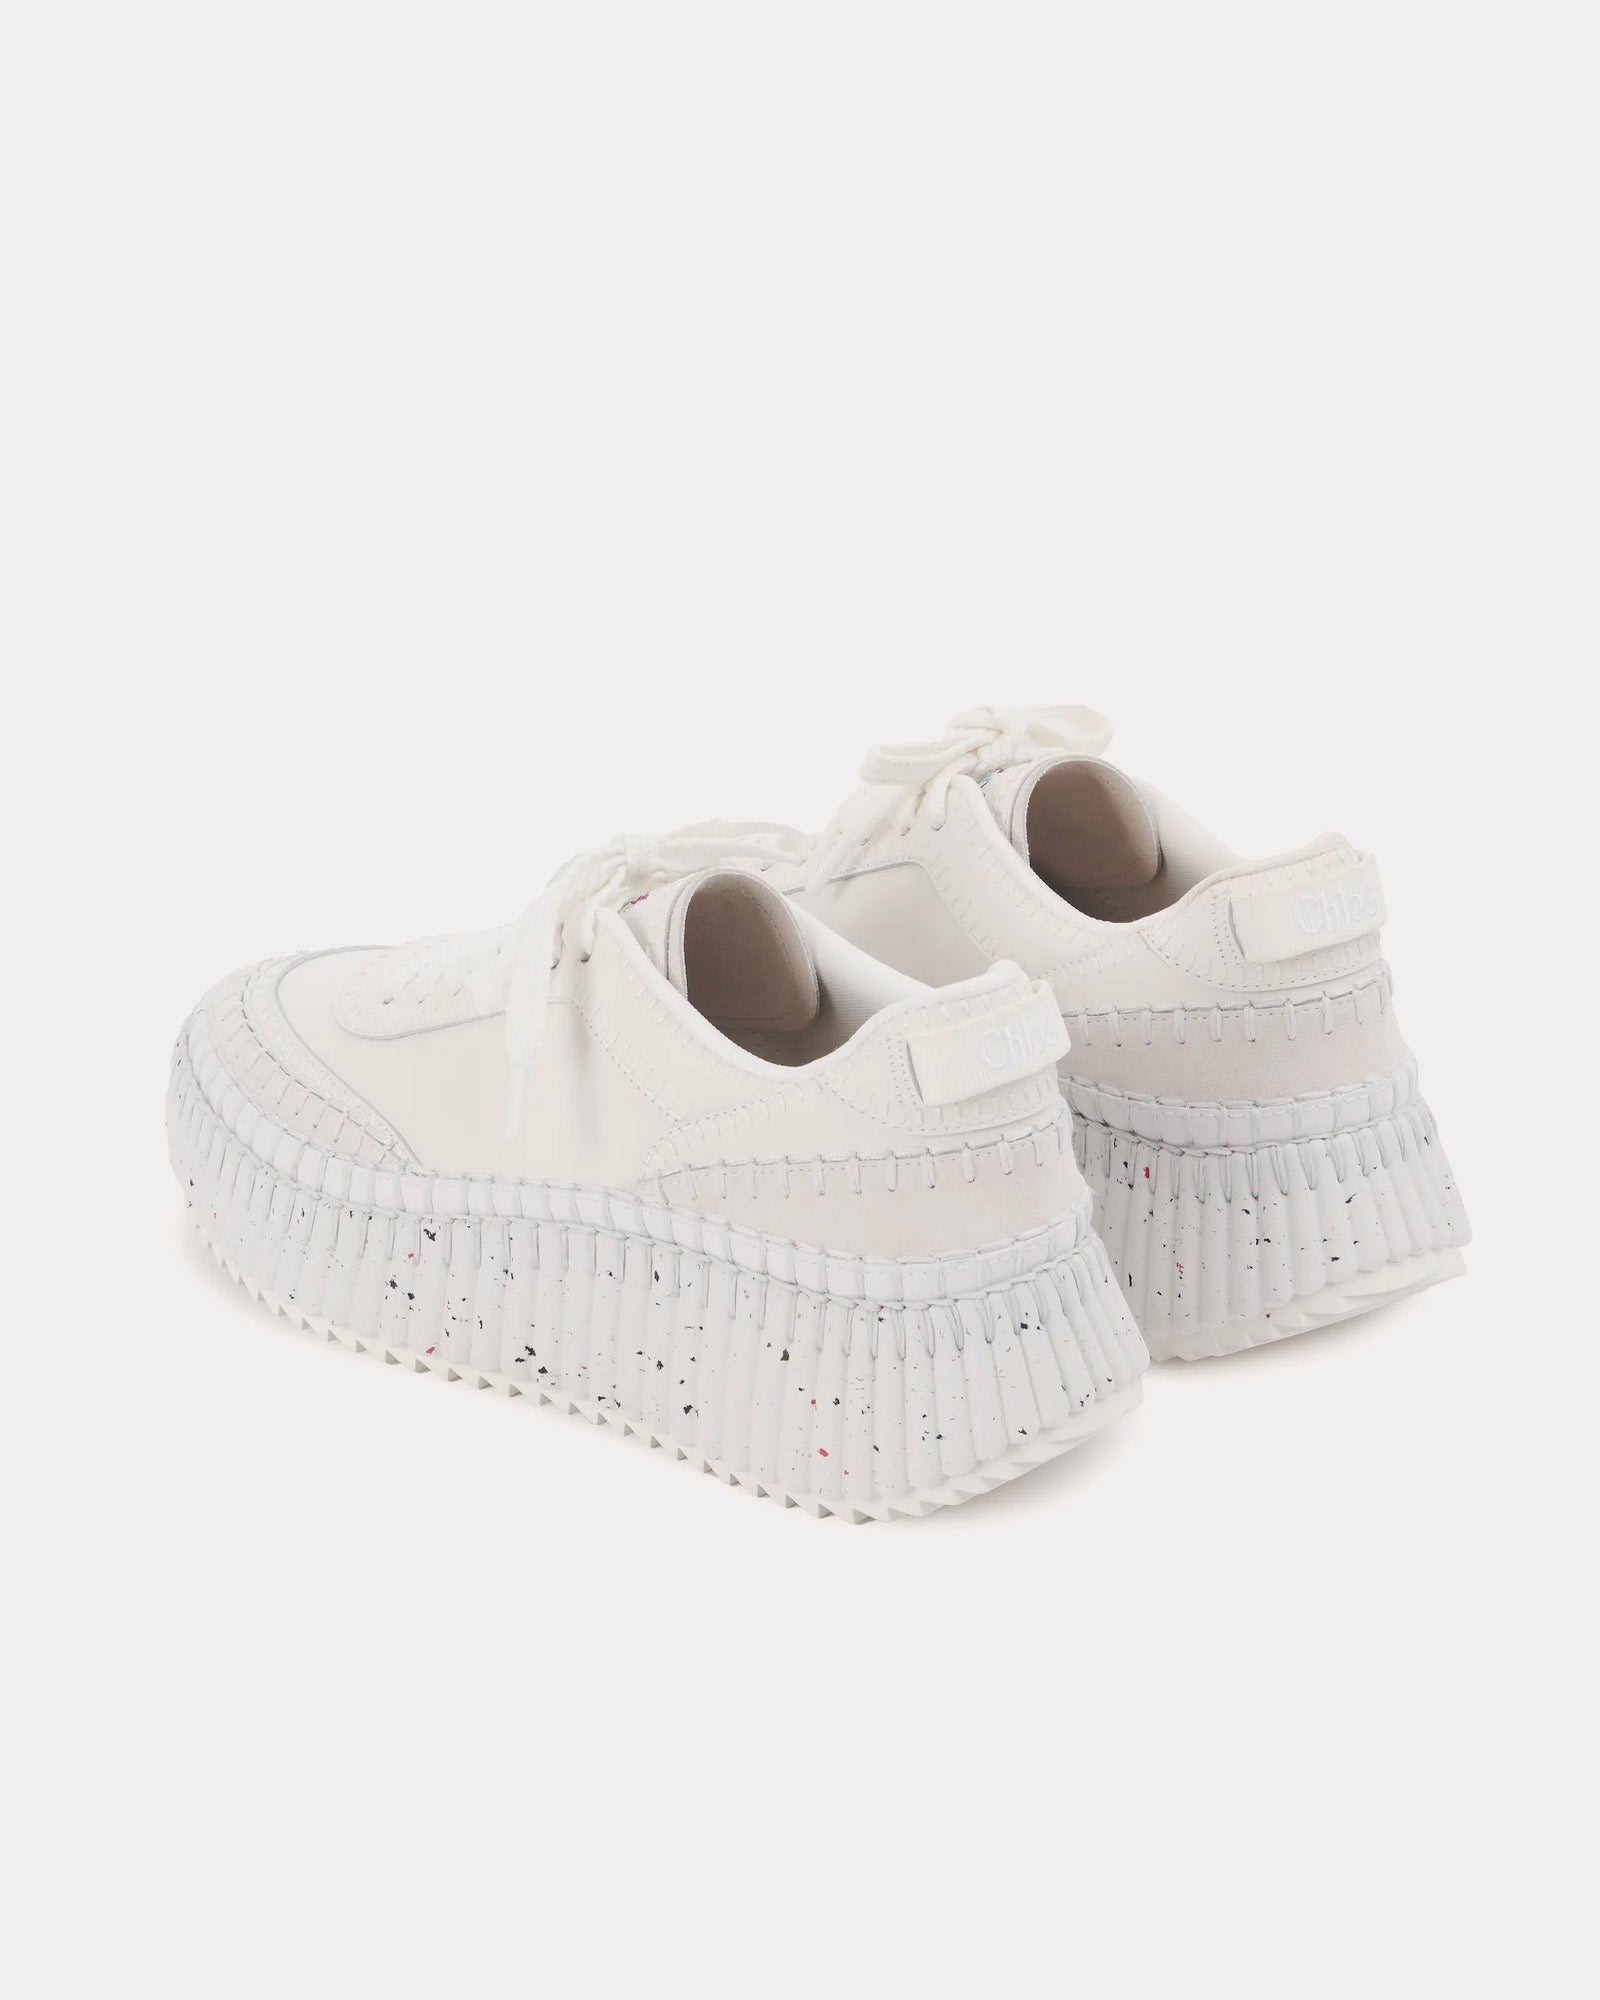 Chloé - Nama Brilliant White Low Top Sneakers